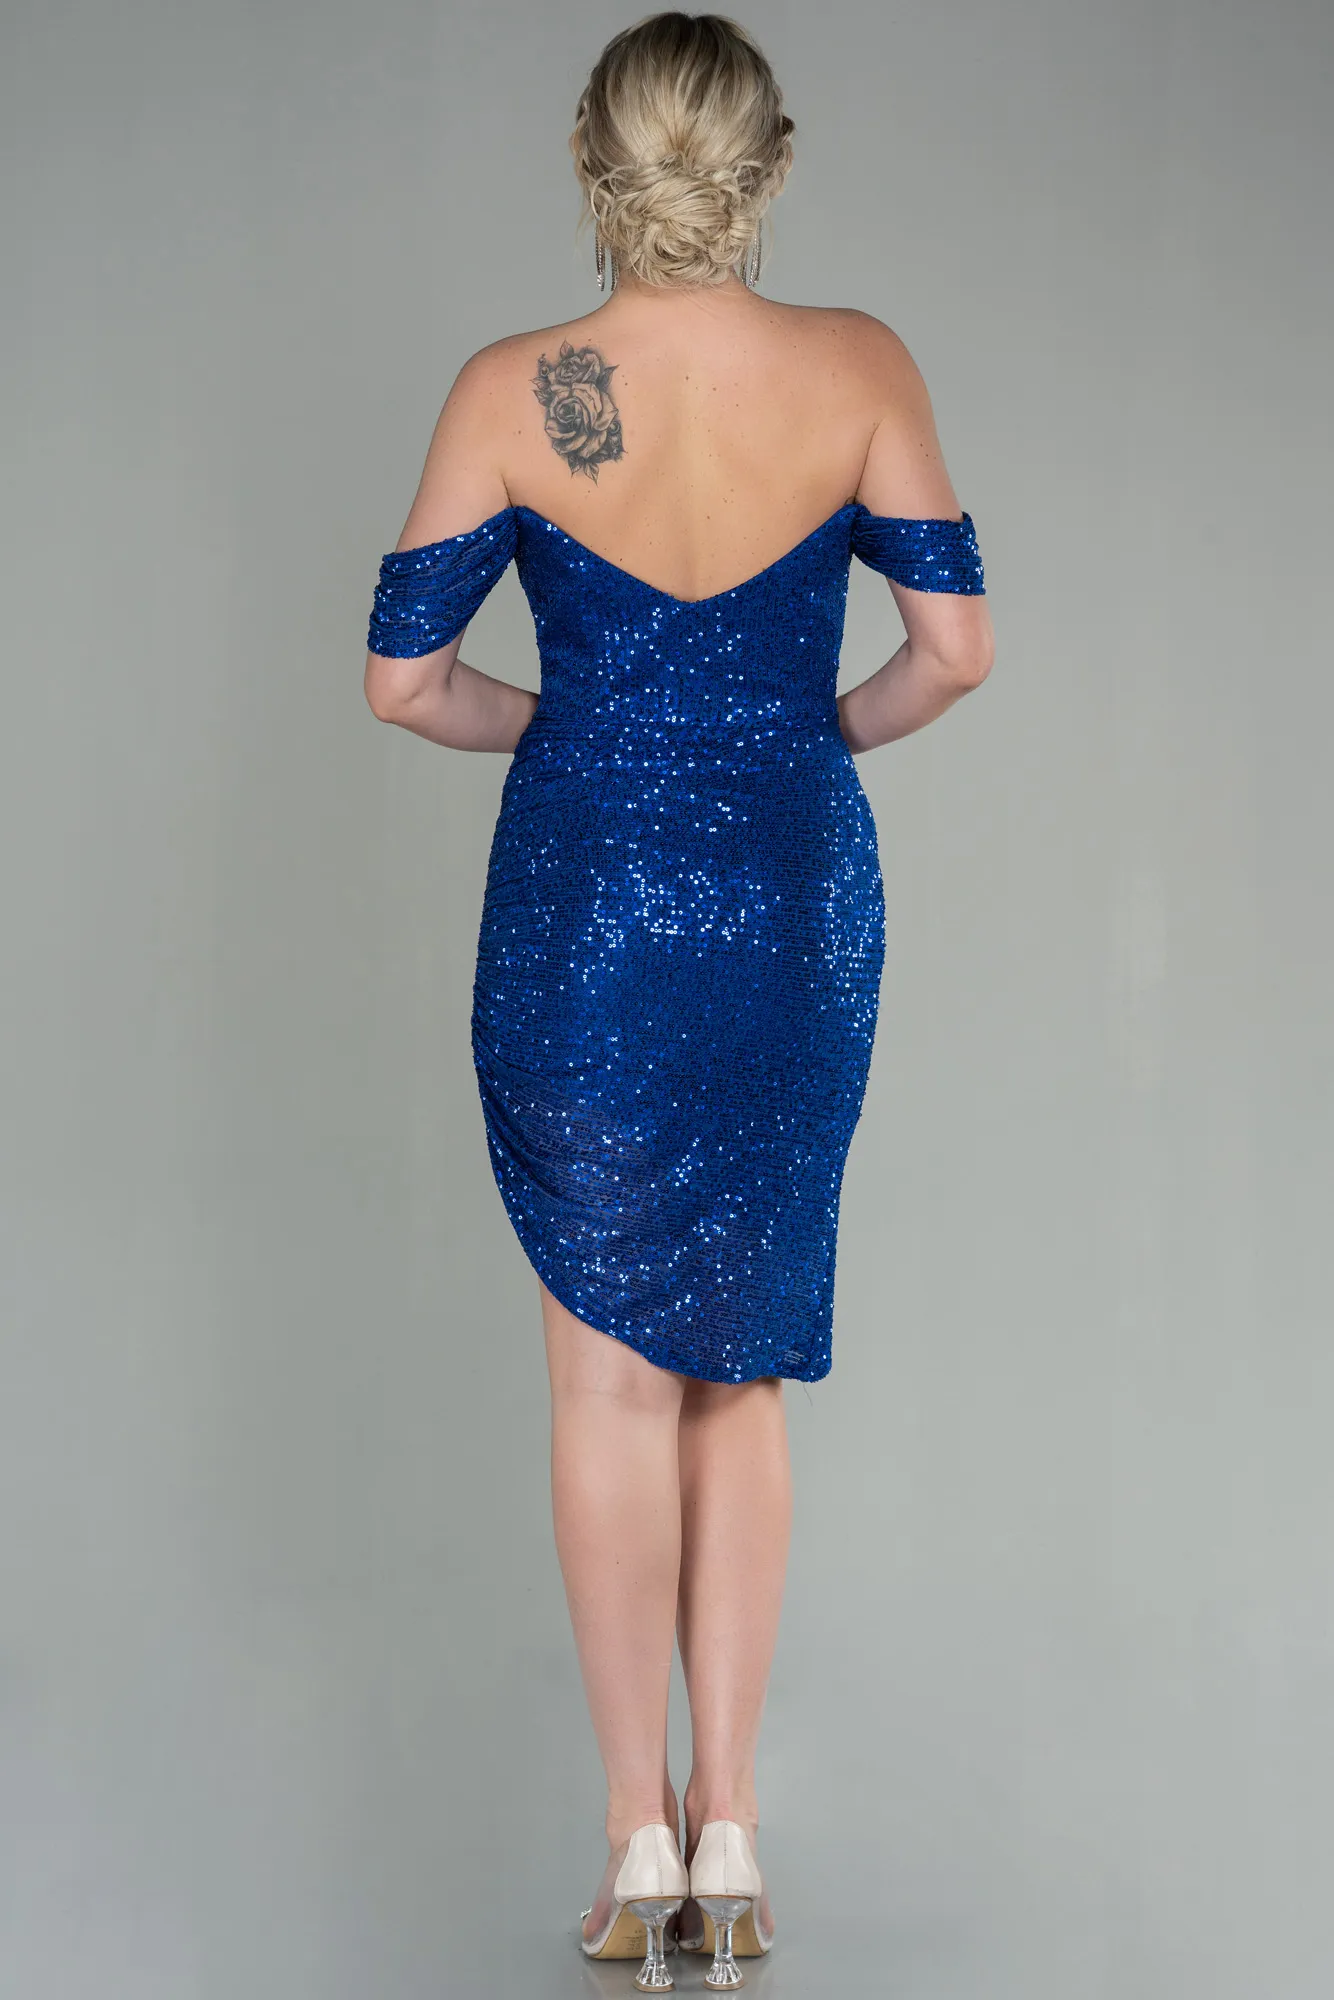 Sax Blue-Short Scaly Invitation Dress ABK1602